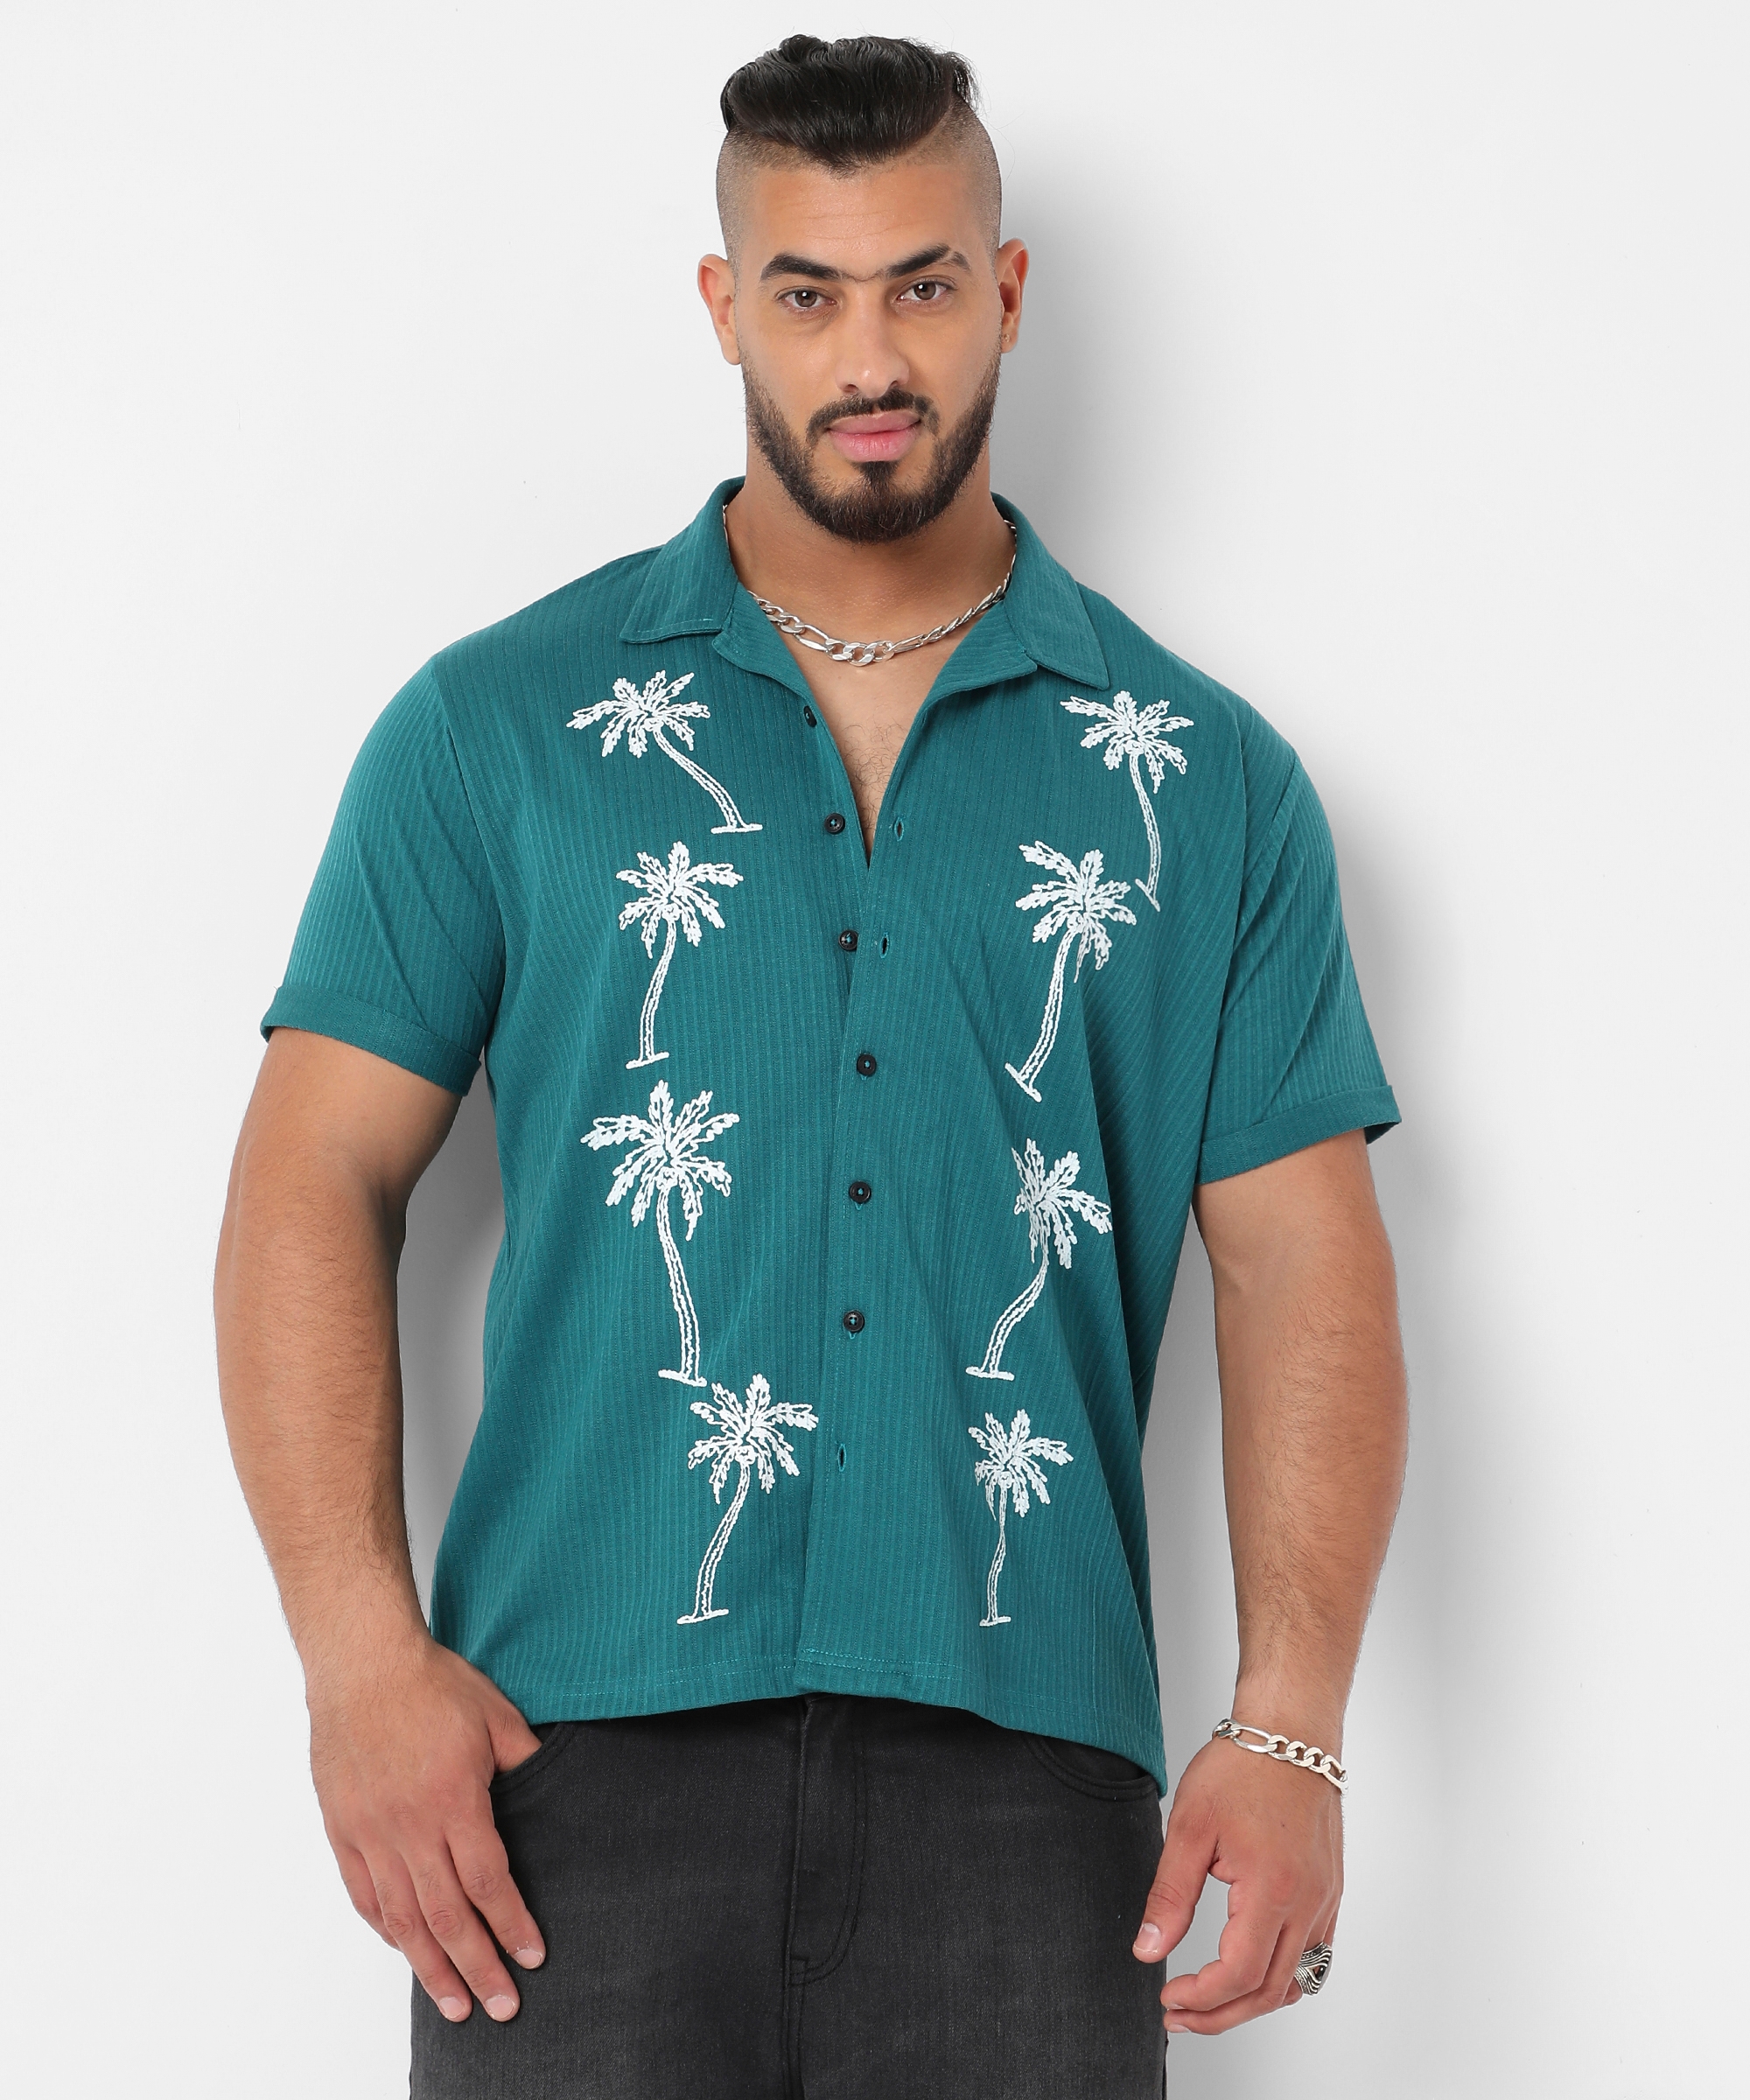 Instafab Plus | Men's Teal Blue Palm Tree Knit Shirt